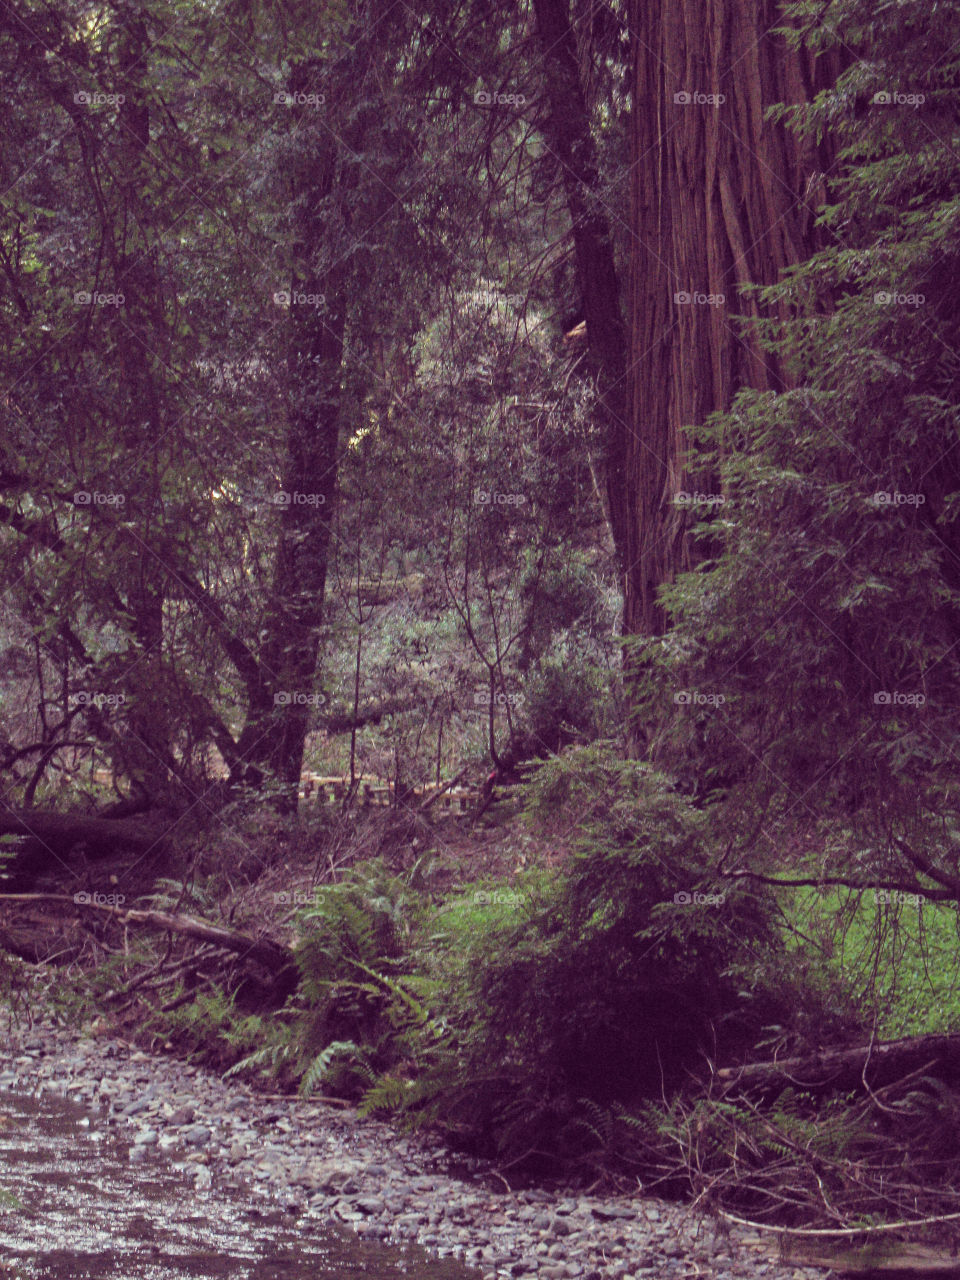 Muir Woods redwoods 